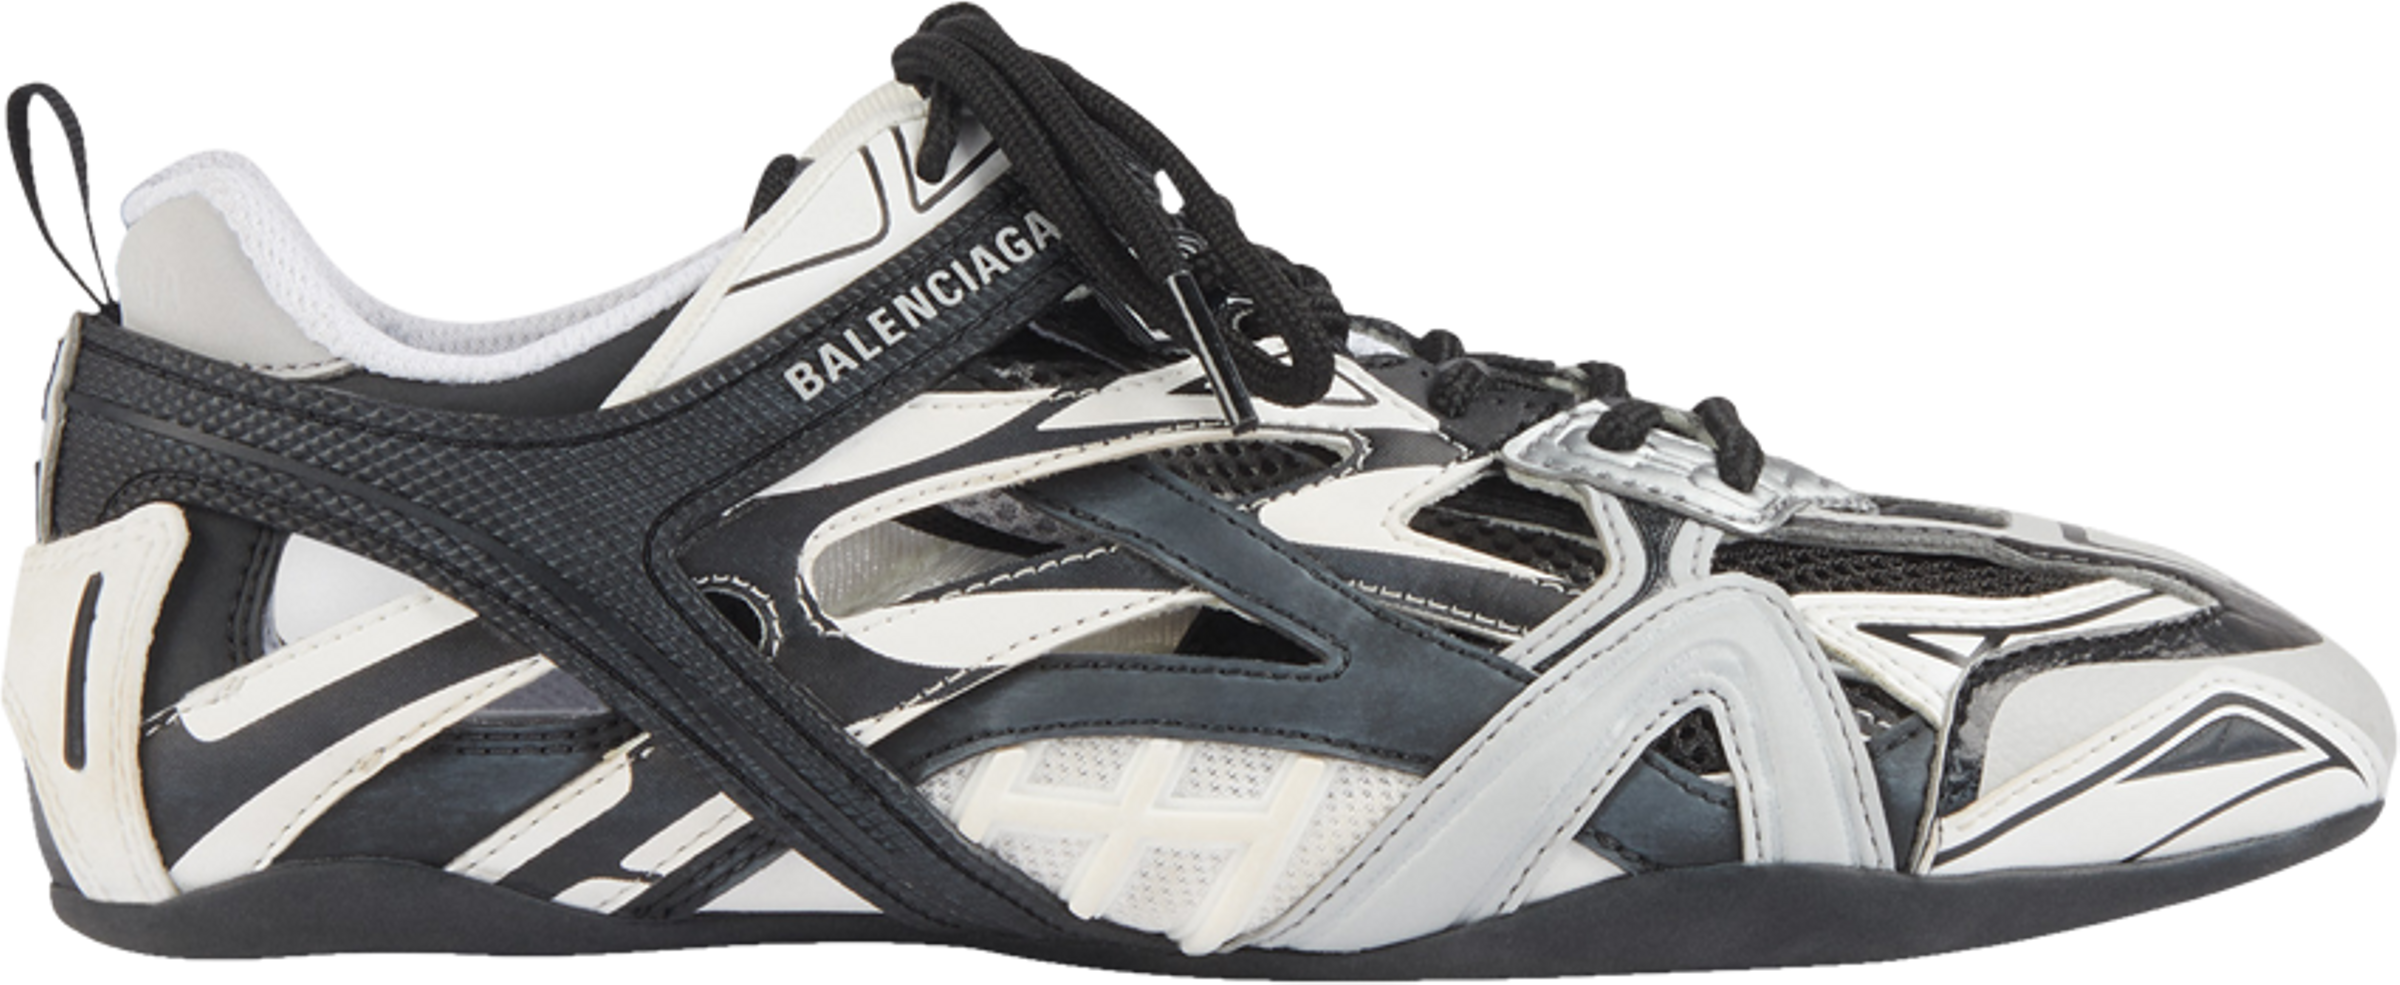 Buy Balenciaga Drive Sneaker 'Light Grey Black' - 624343 W2FD1 1019 | GOAT